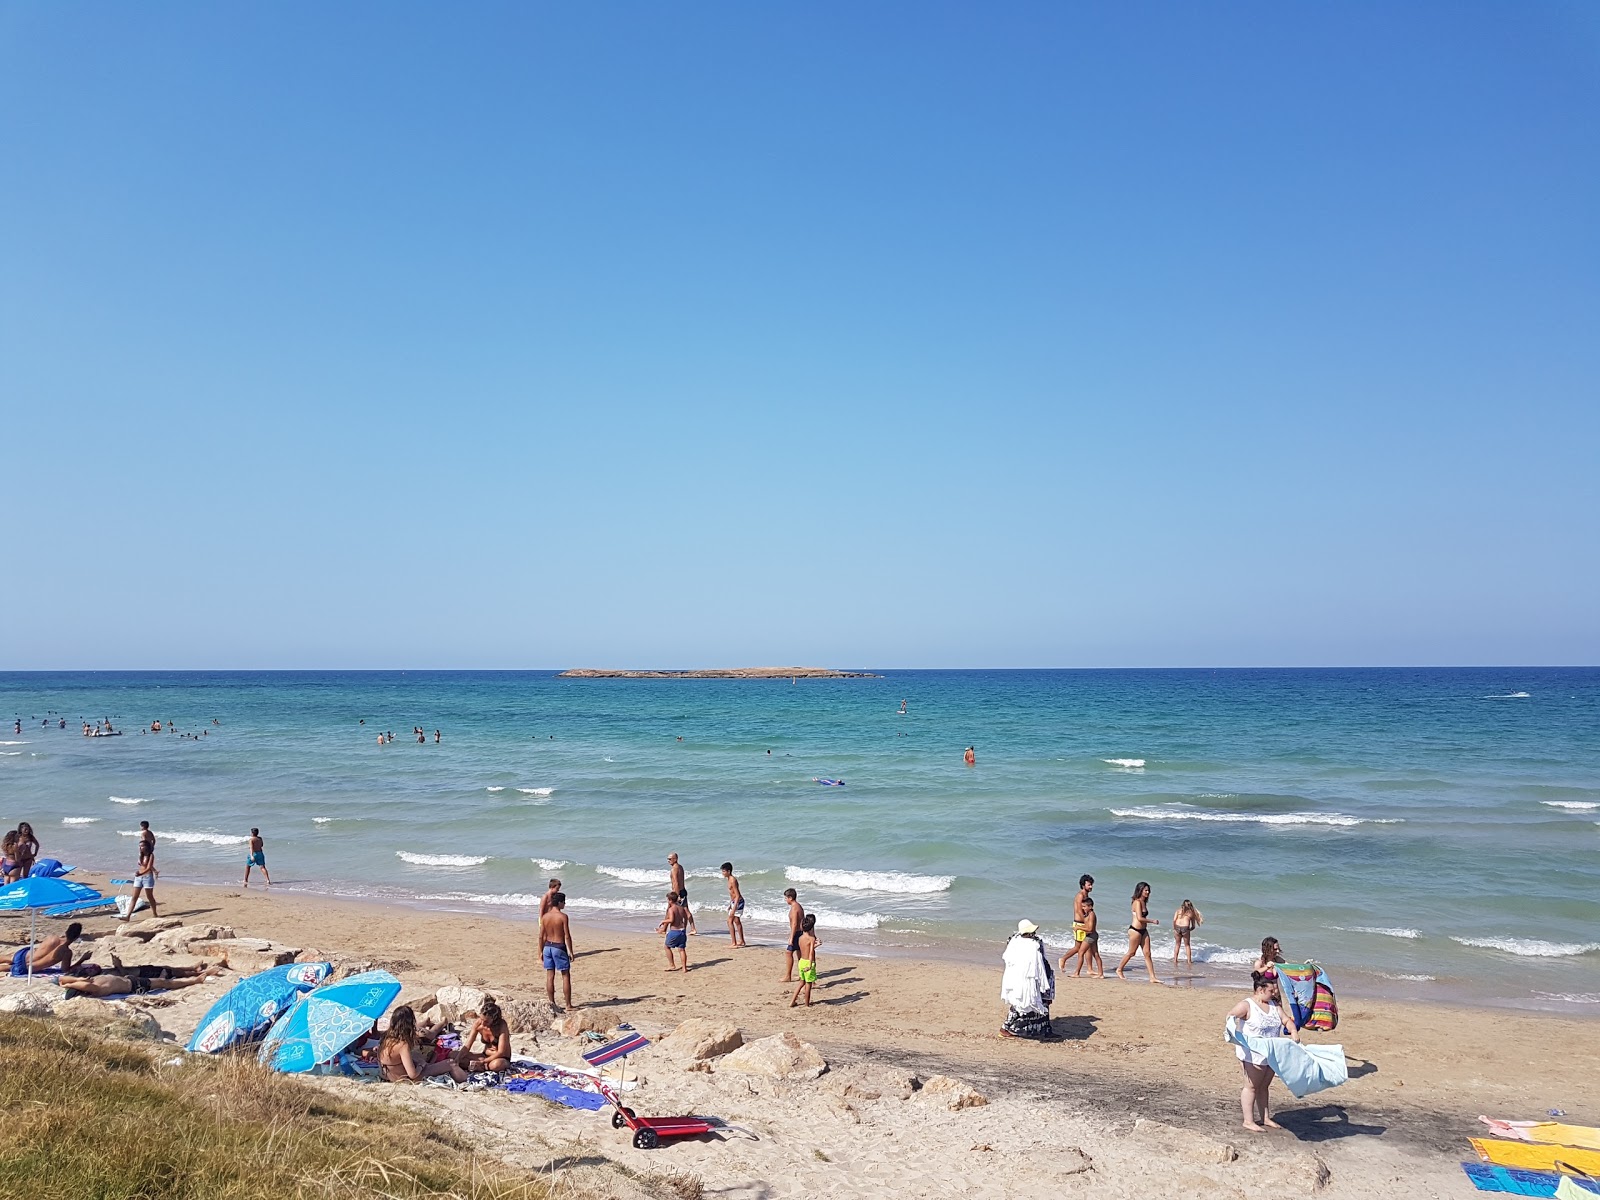 Photo of Posticeddu beach beach resort area